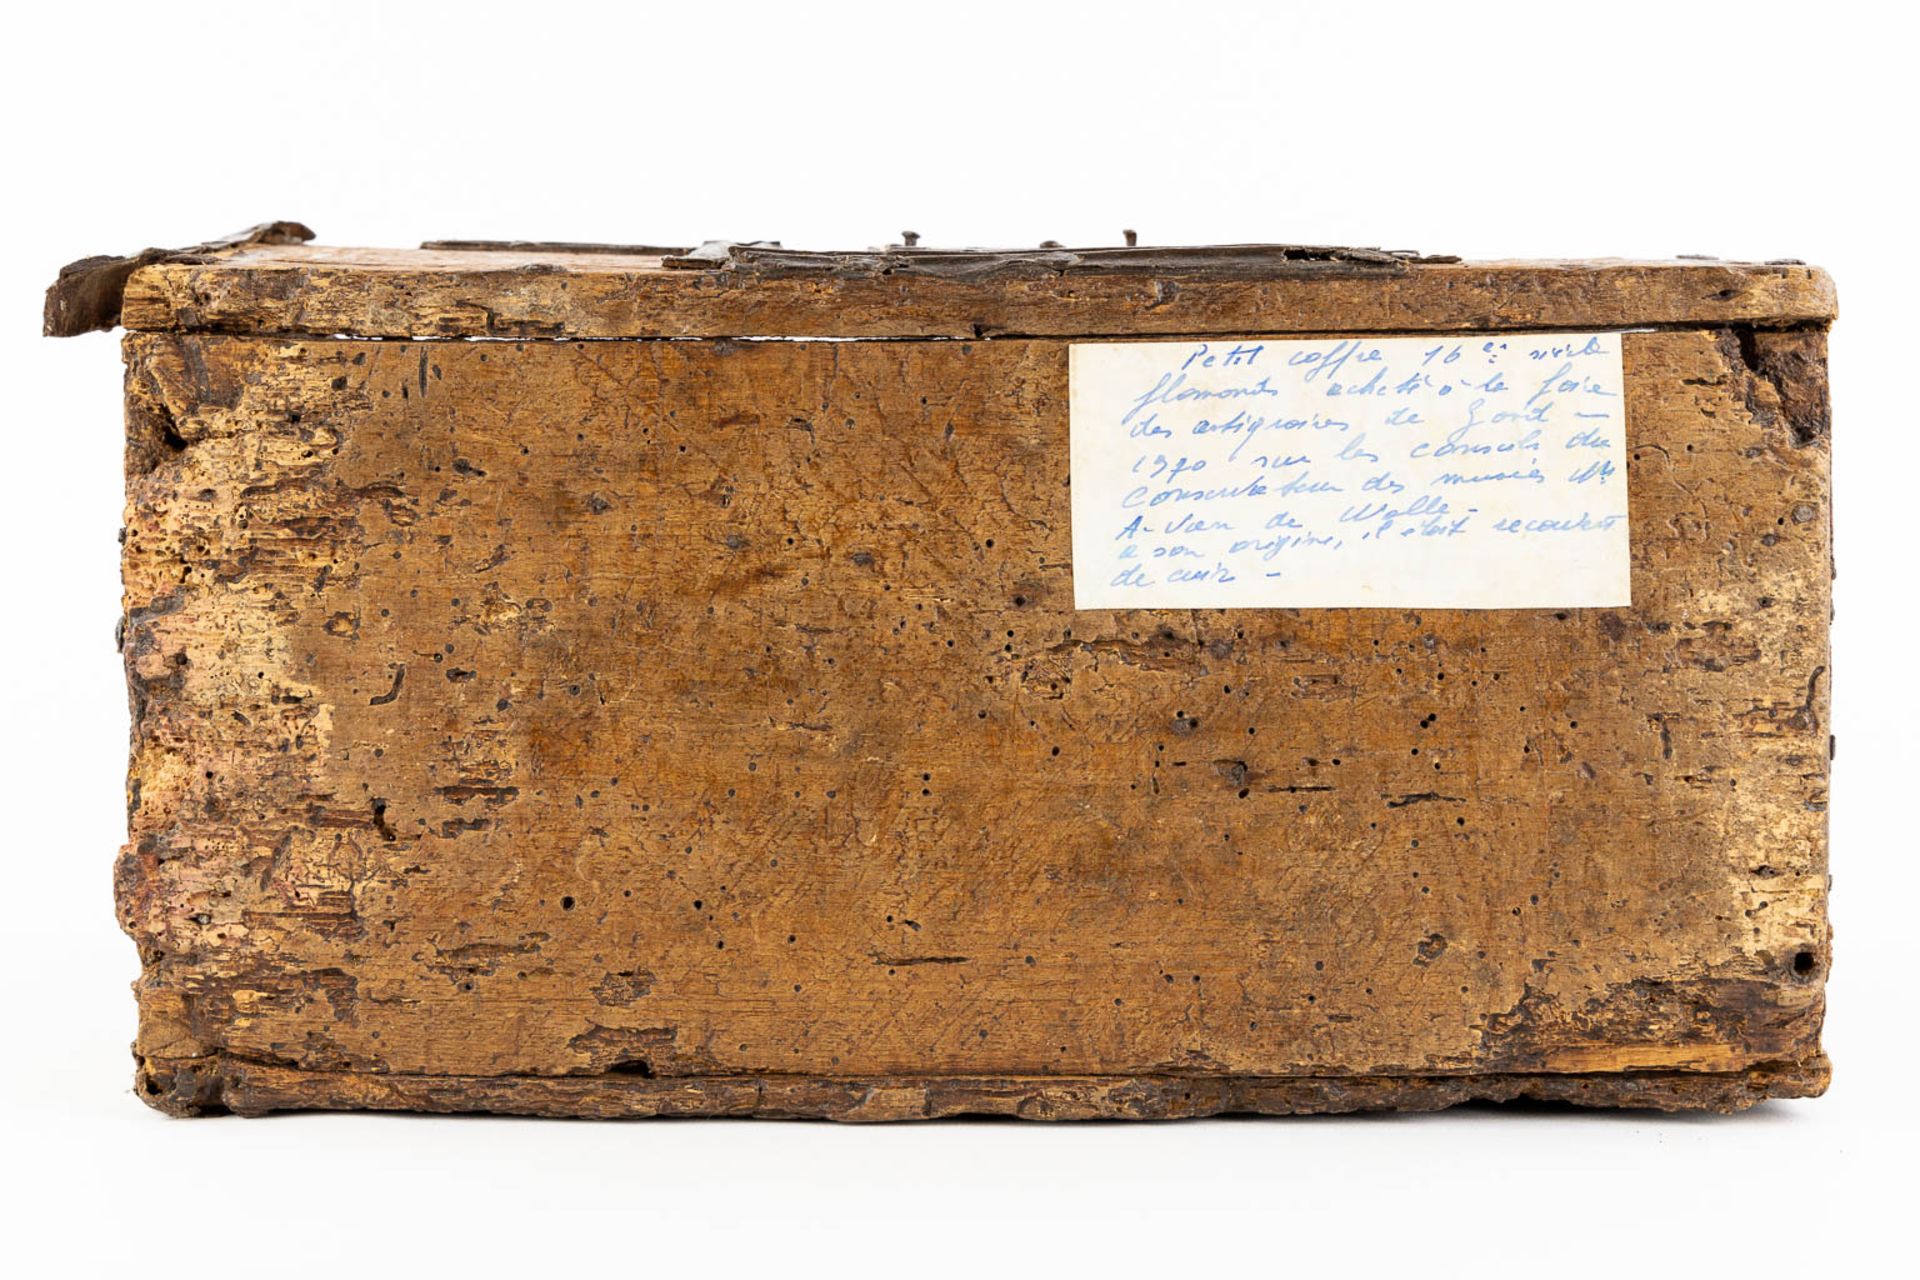 An antique money box or storage chest, wood and wrought iron, 16th/17th C. (L:20 x W:36 x H:22 cm) - Bild 8 aus 14